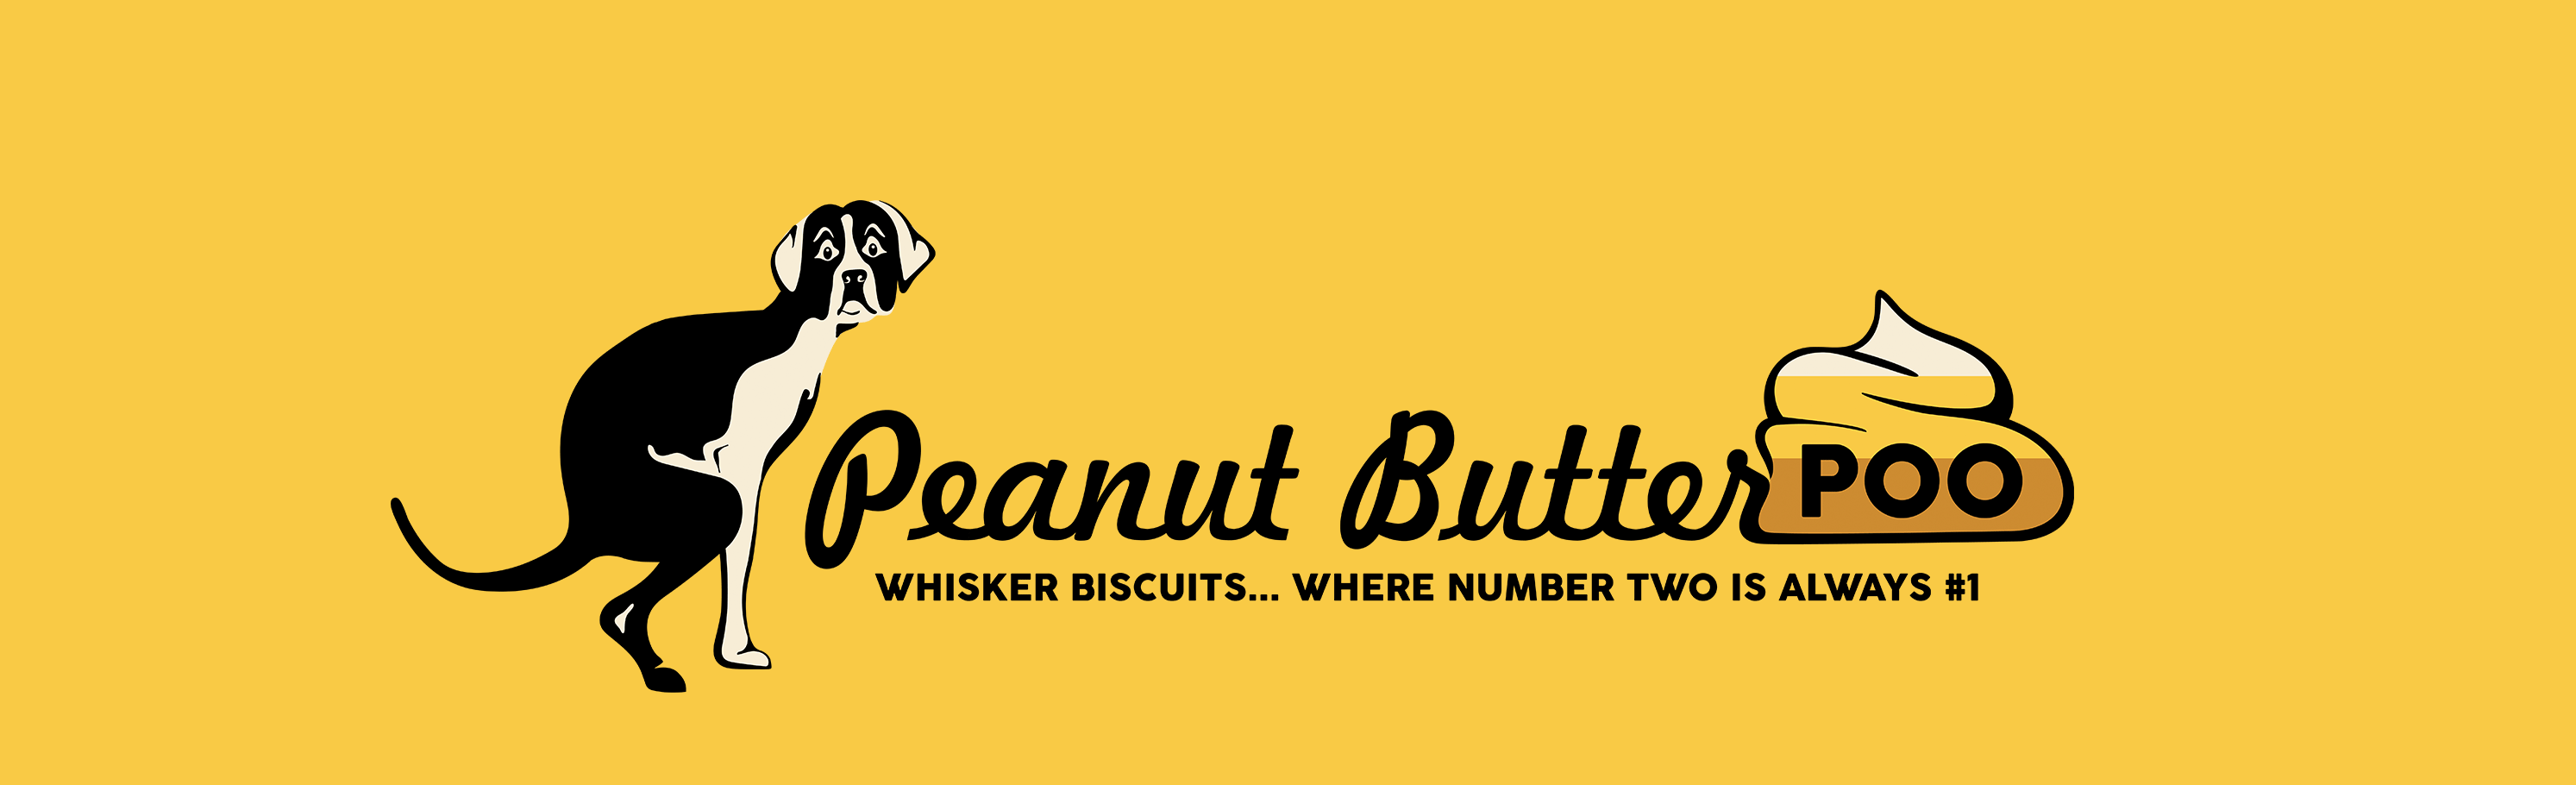 Peanut Butter Poo